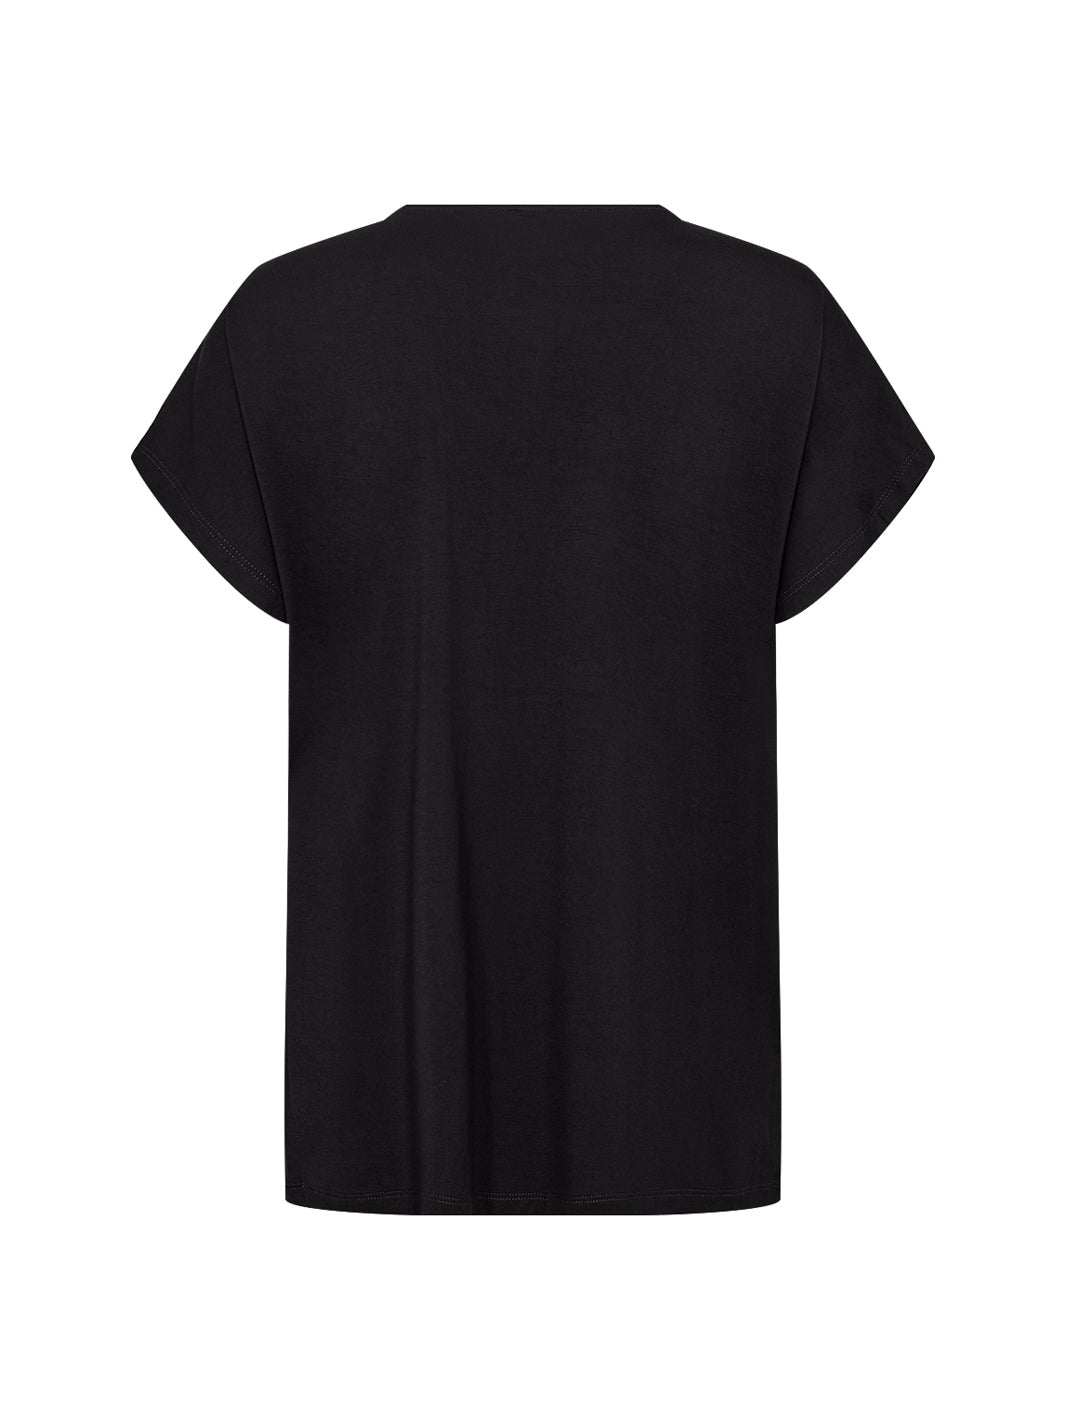 Soya Concept Marica 269 t-shirt black - Online-Mode